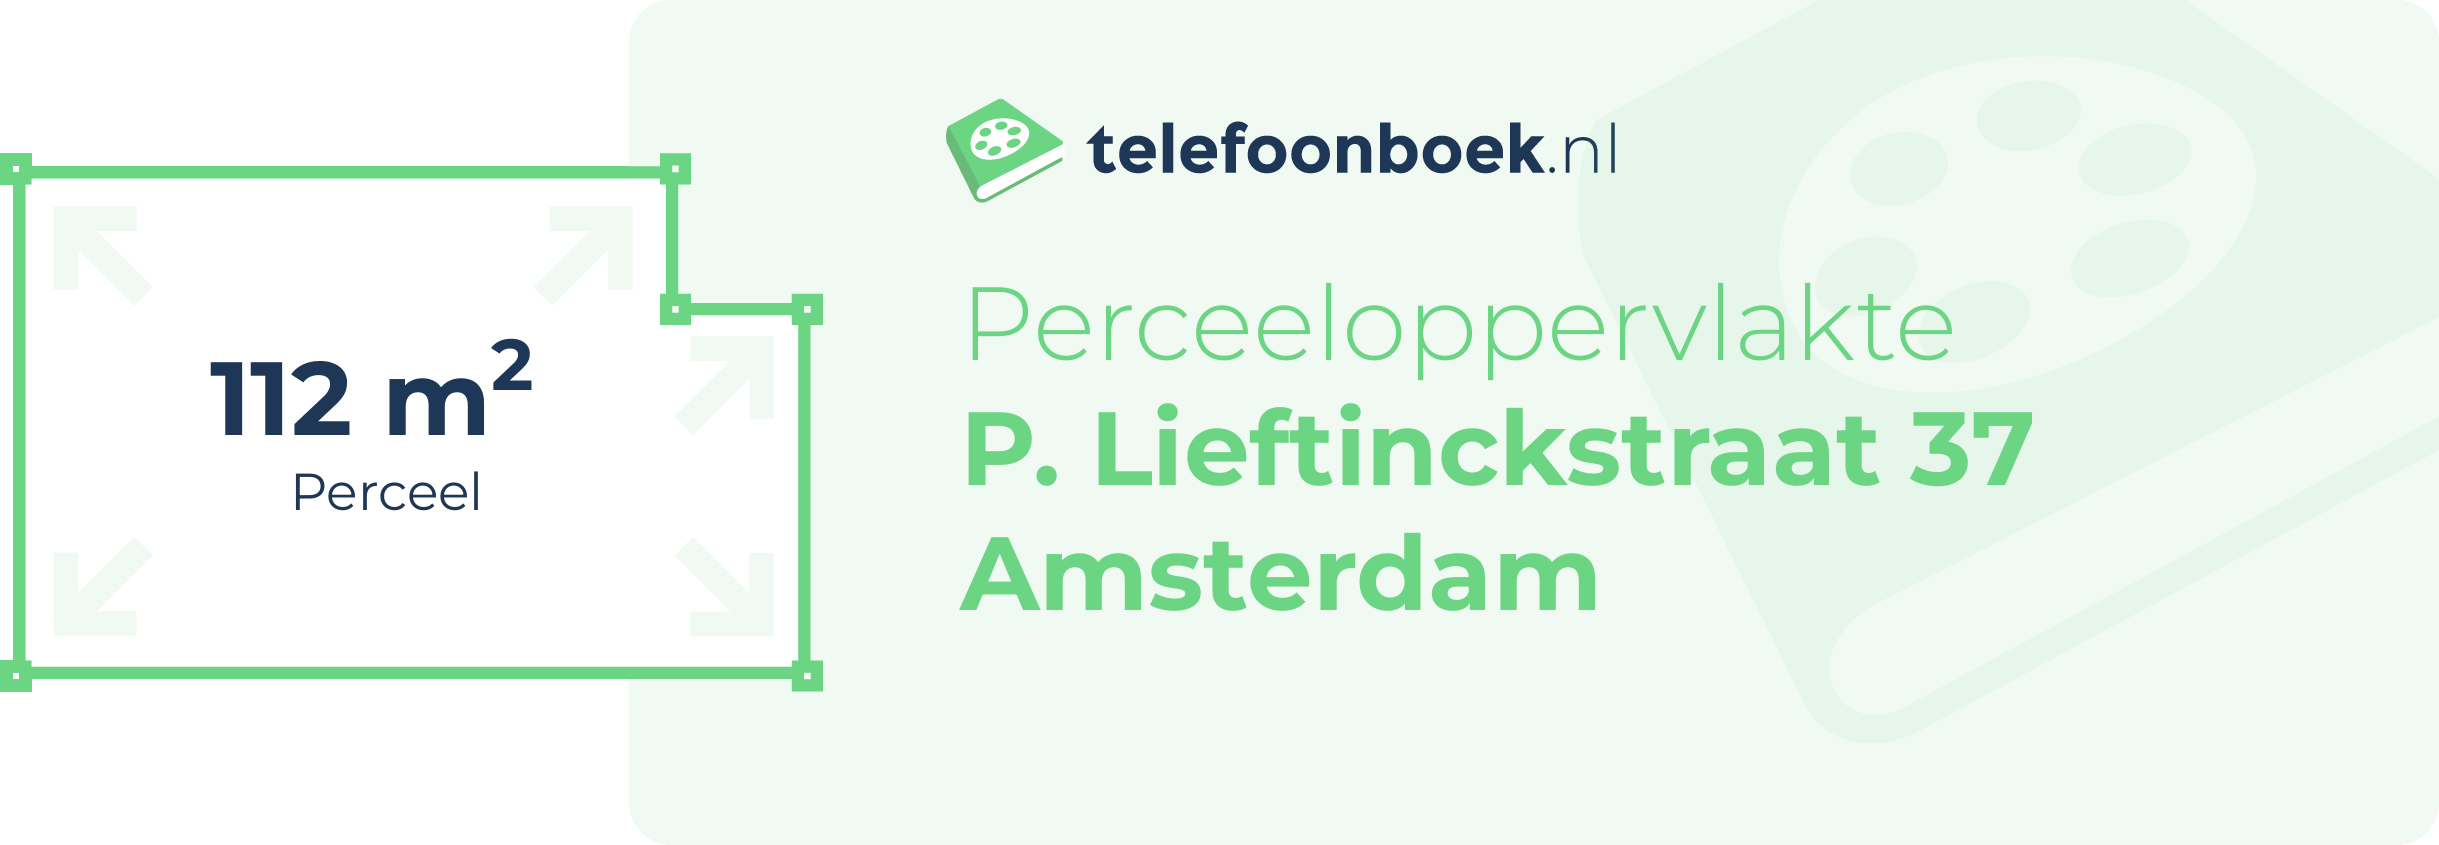 Perceeloppervlakte P. Lieftinckstraat 37 Amsterdam